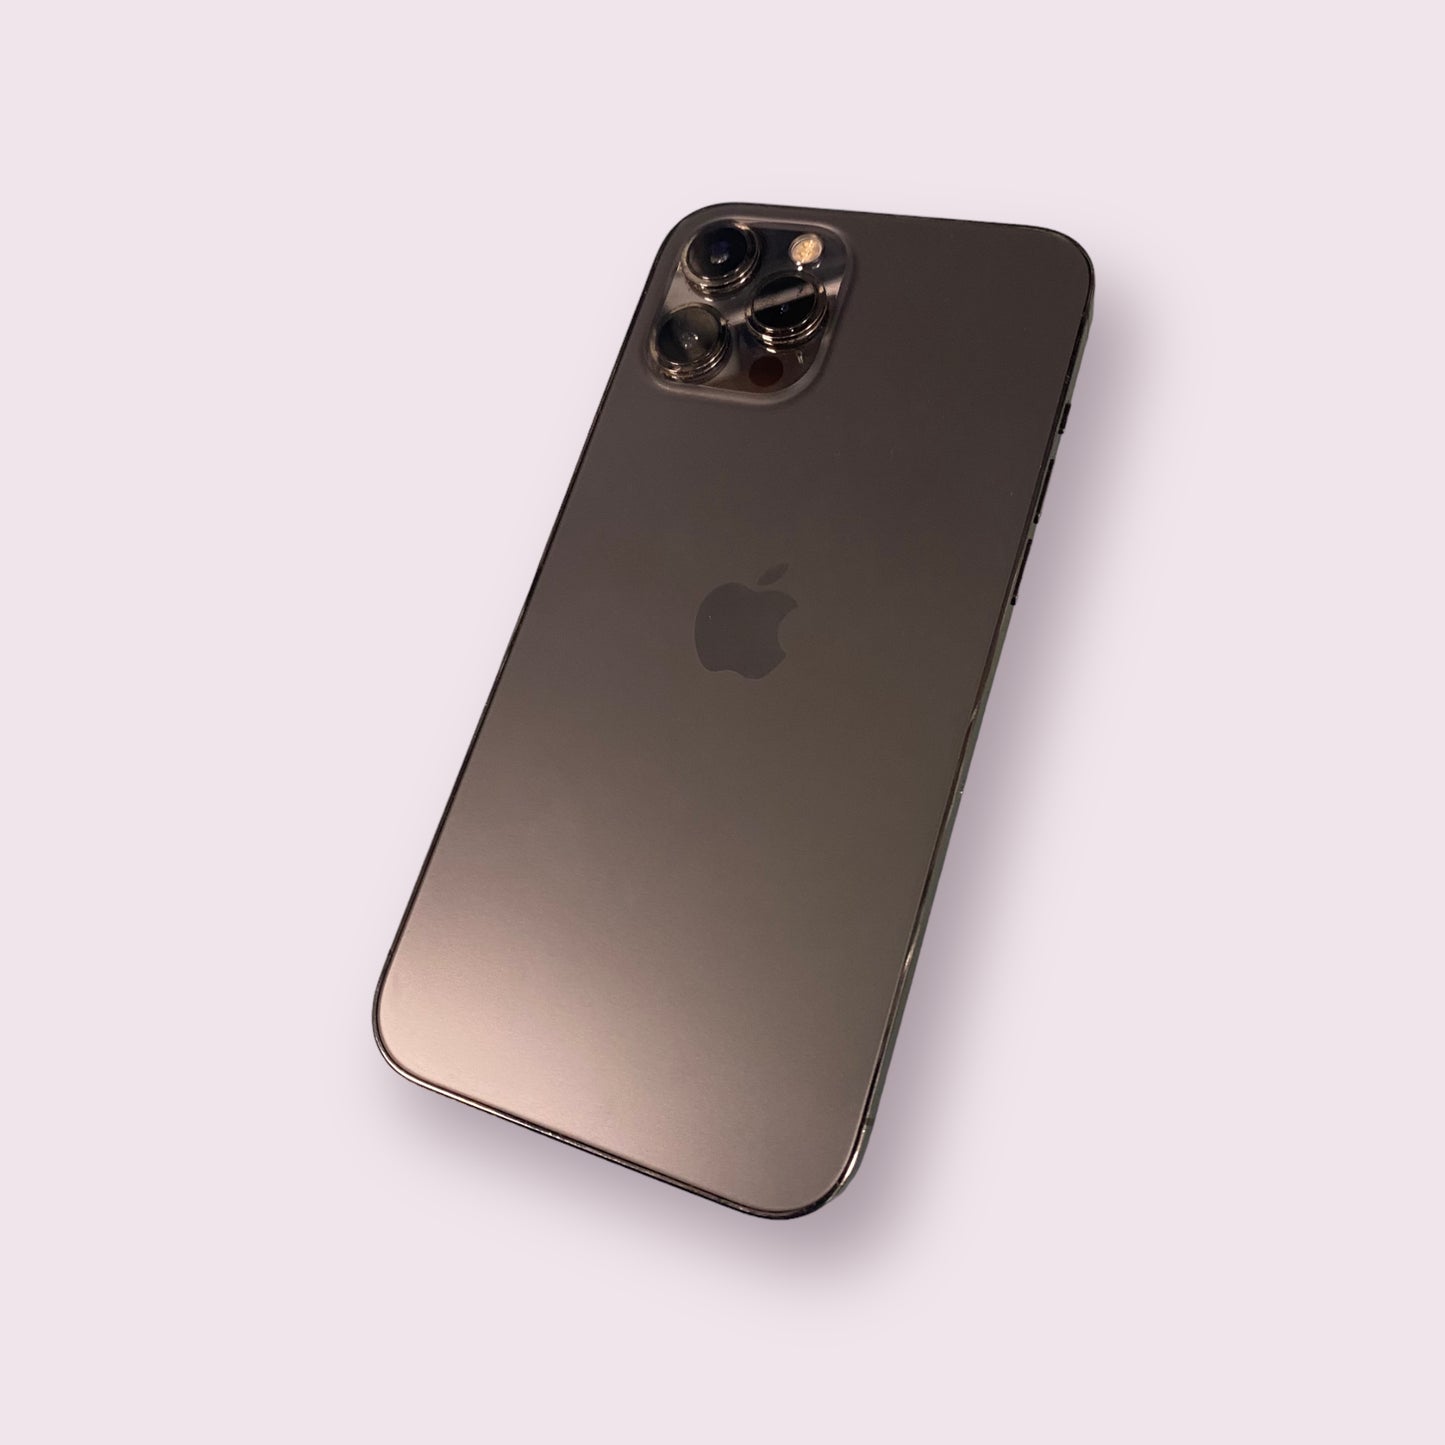 Apple iPhone 12 Pro Max 128GB Graphite - Unlocked - Grade B